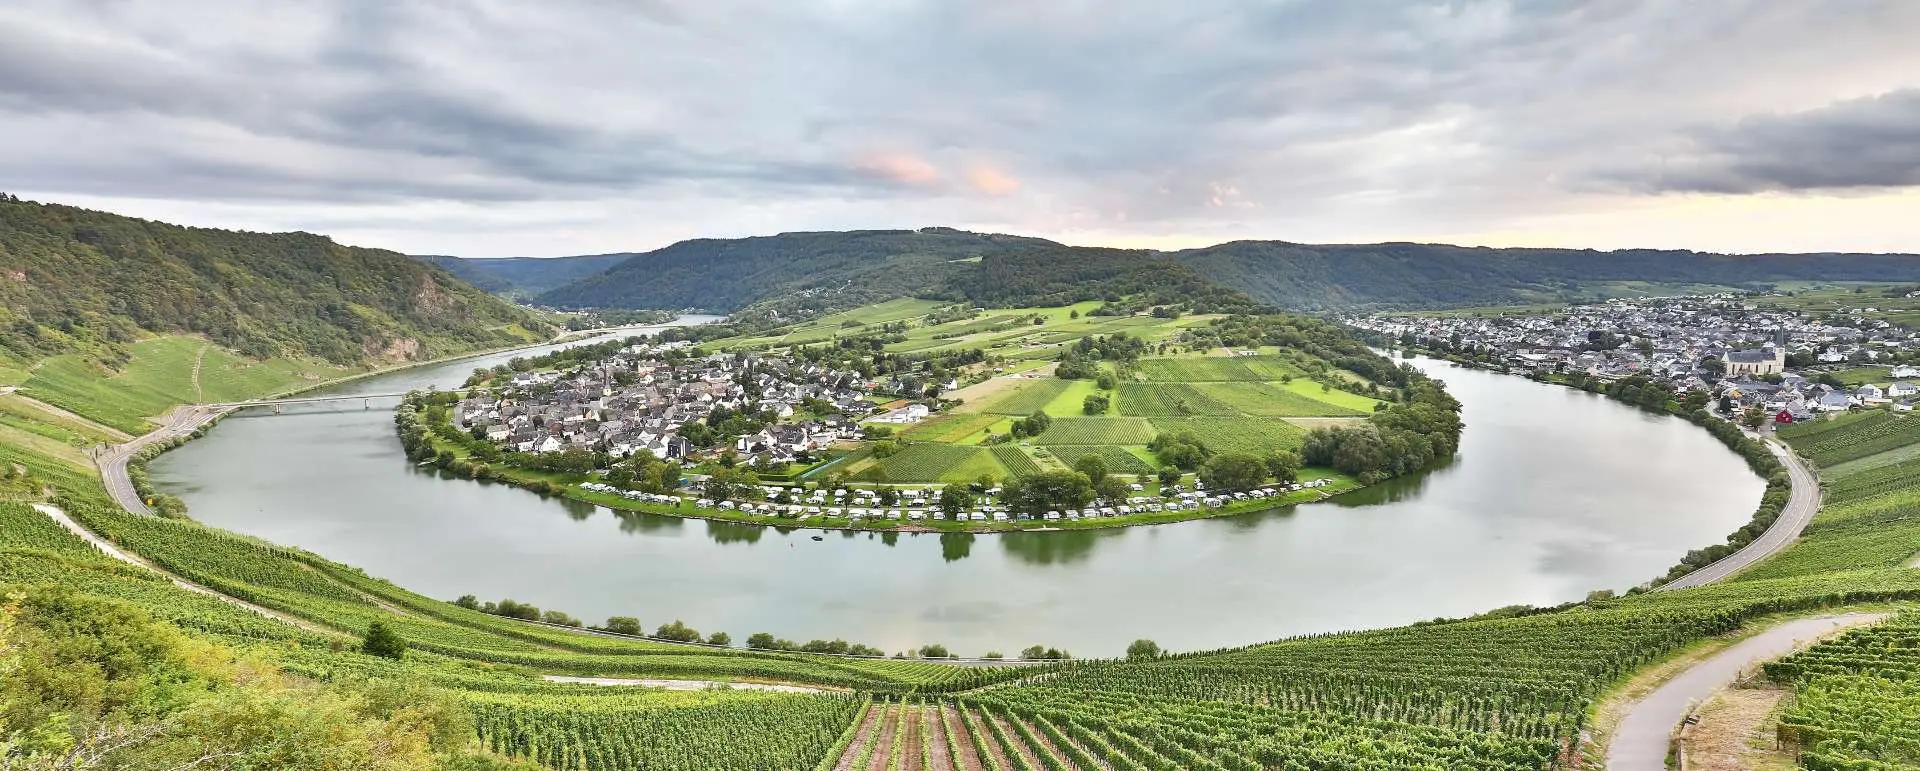 Rhineland-Palatinate - the destination for groups